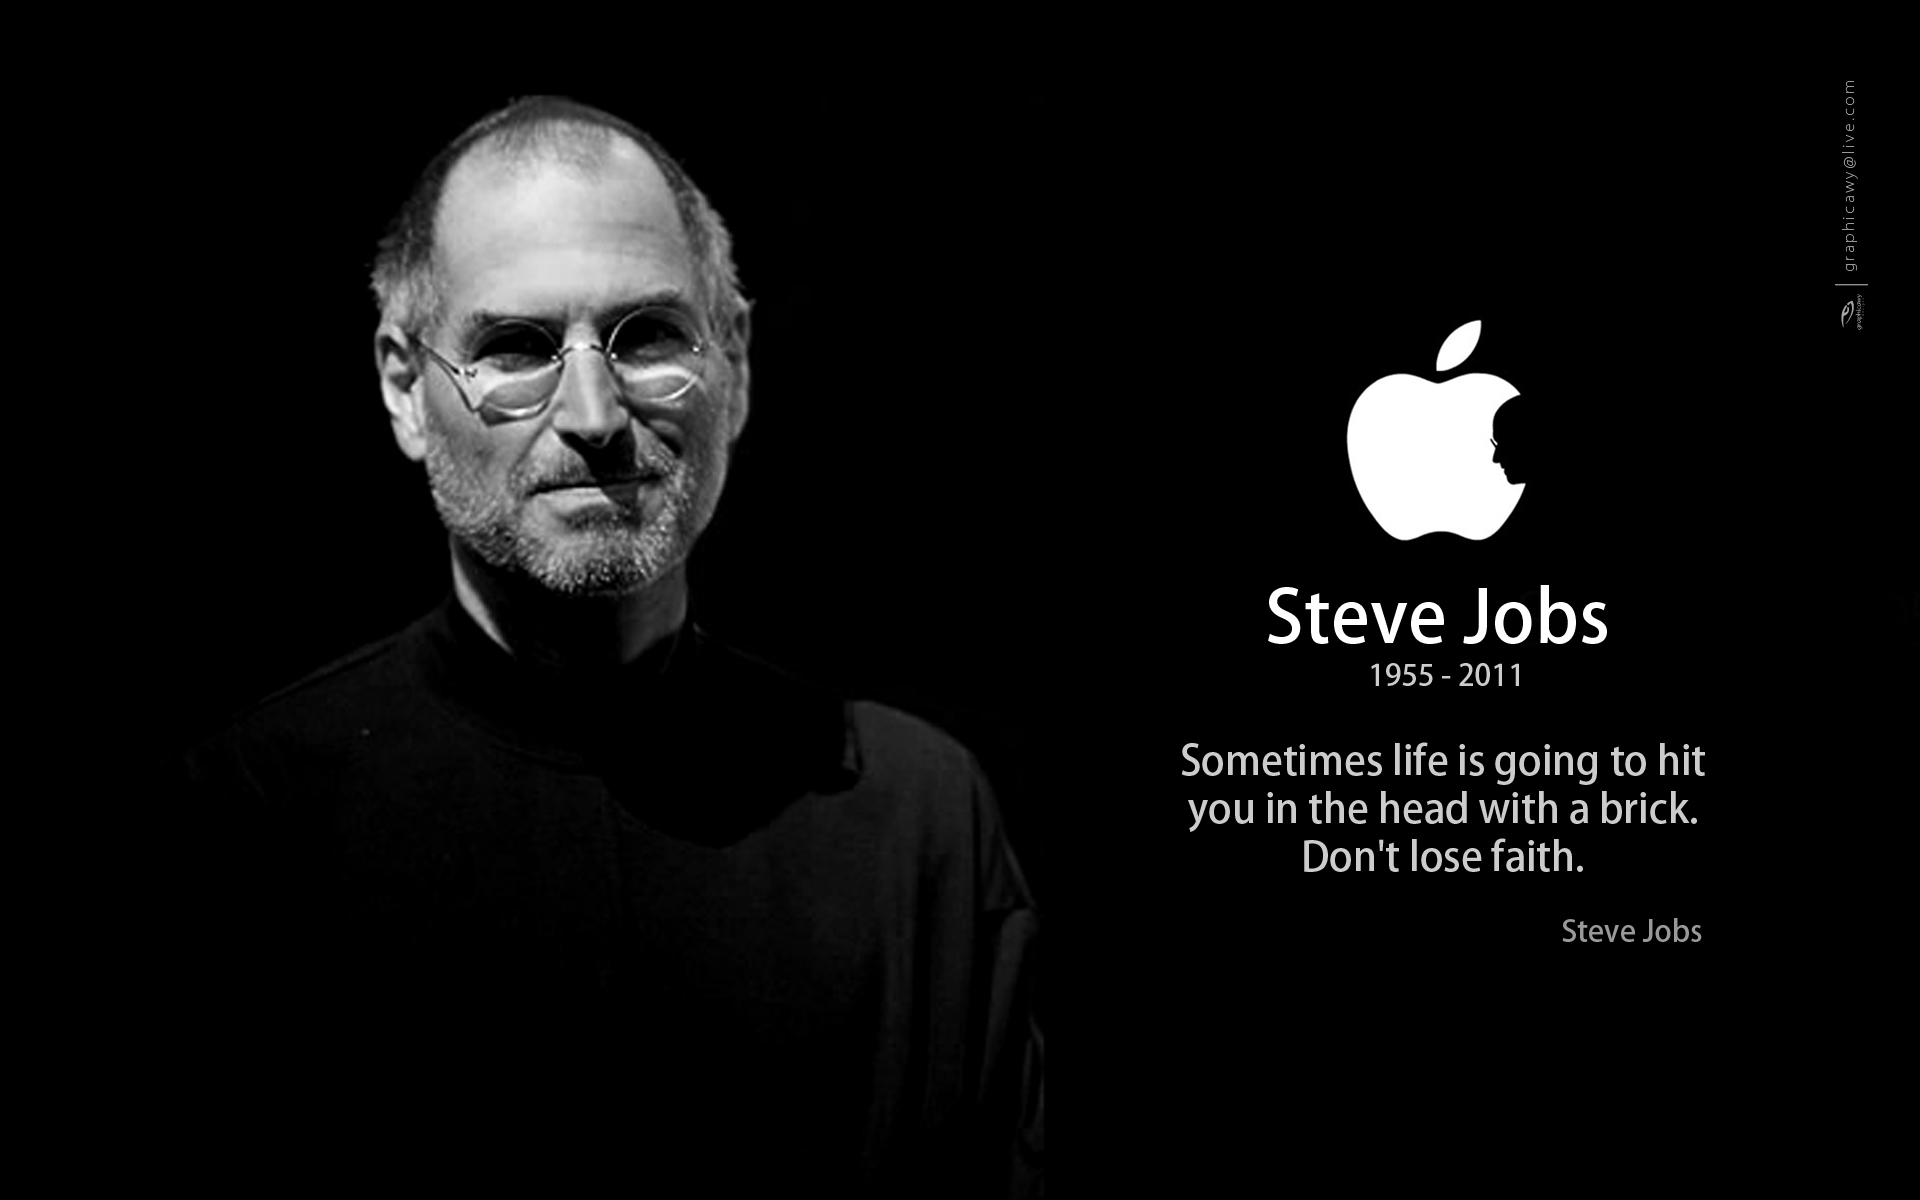 Papel Tapiz De Steve Jobs Wallpaper Tumaestroweb